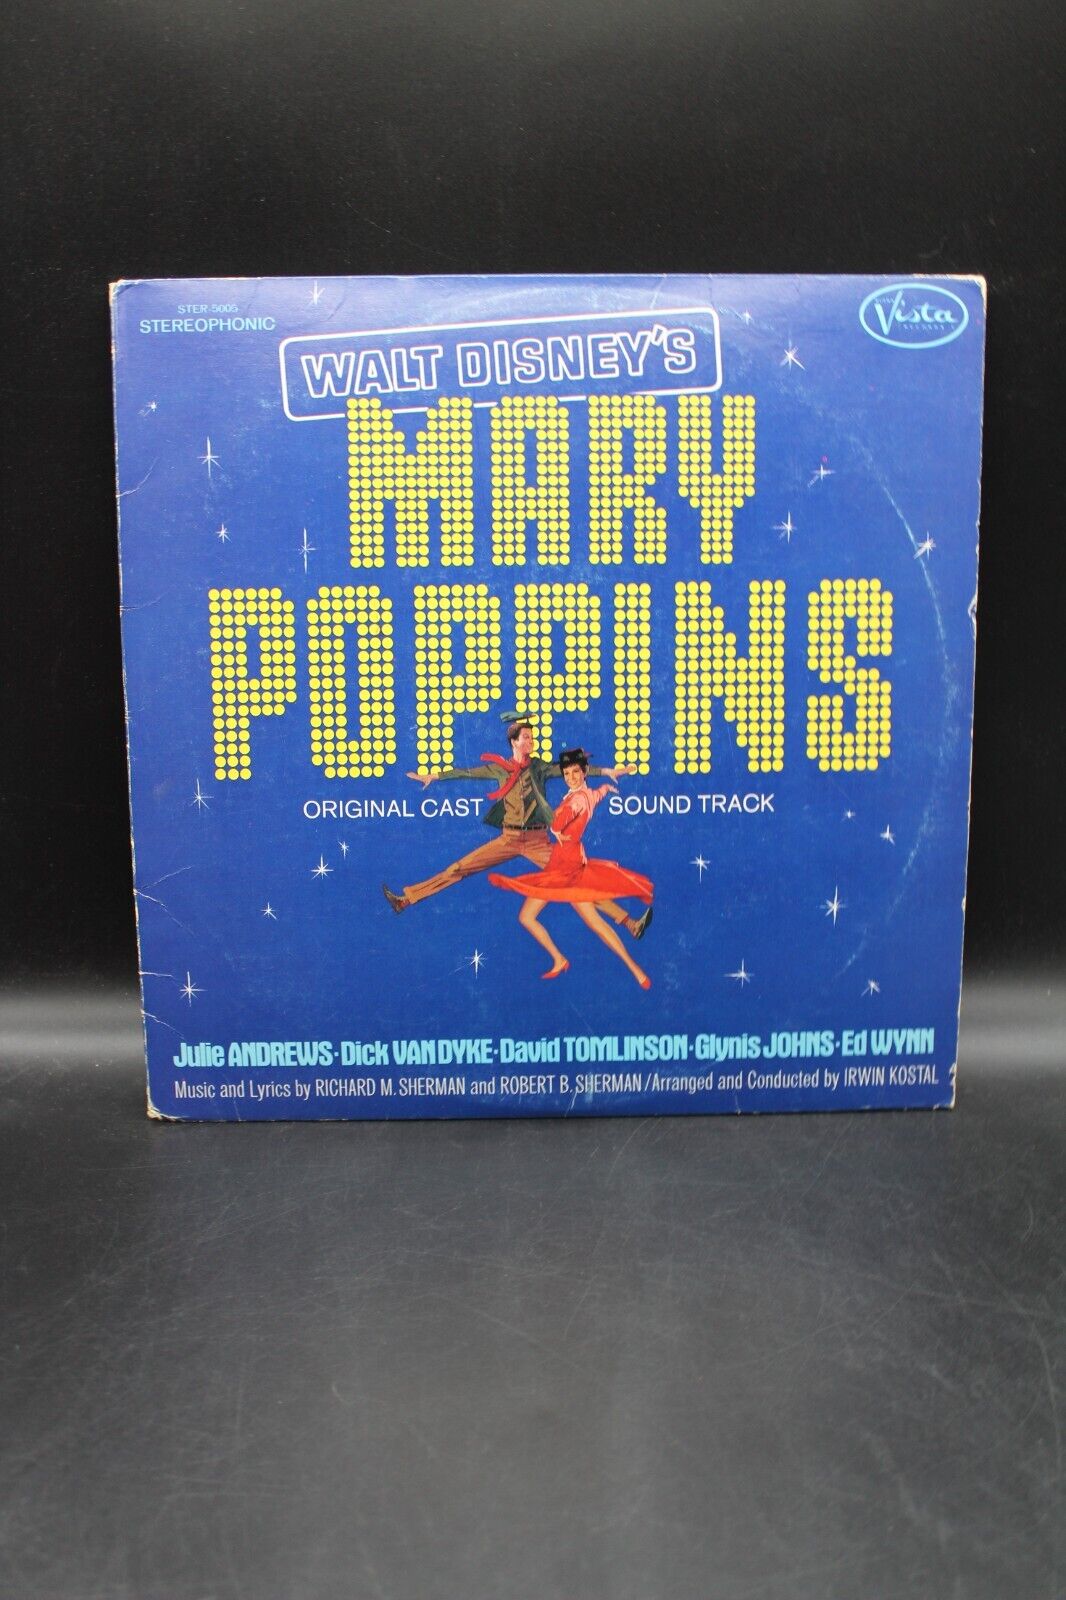 Walt Disney’s Mary Poppins Original Cast Soundtrack Vinyl LP - 1973 STER-5005